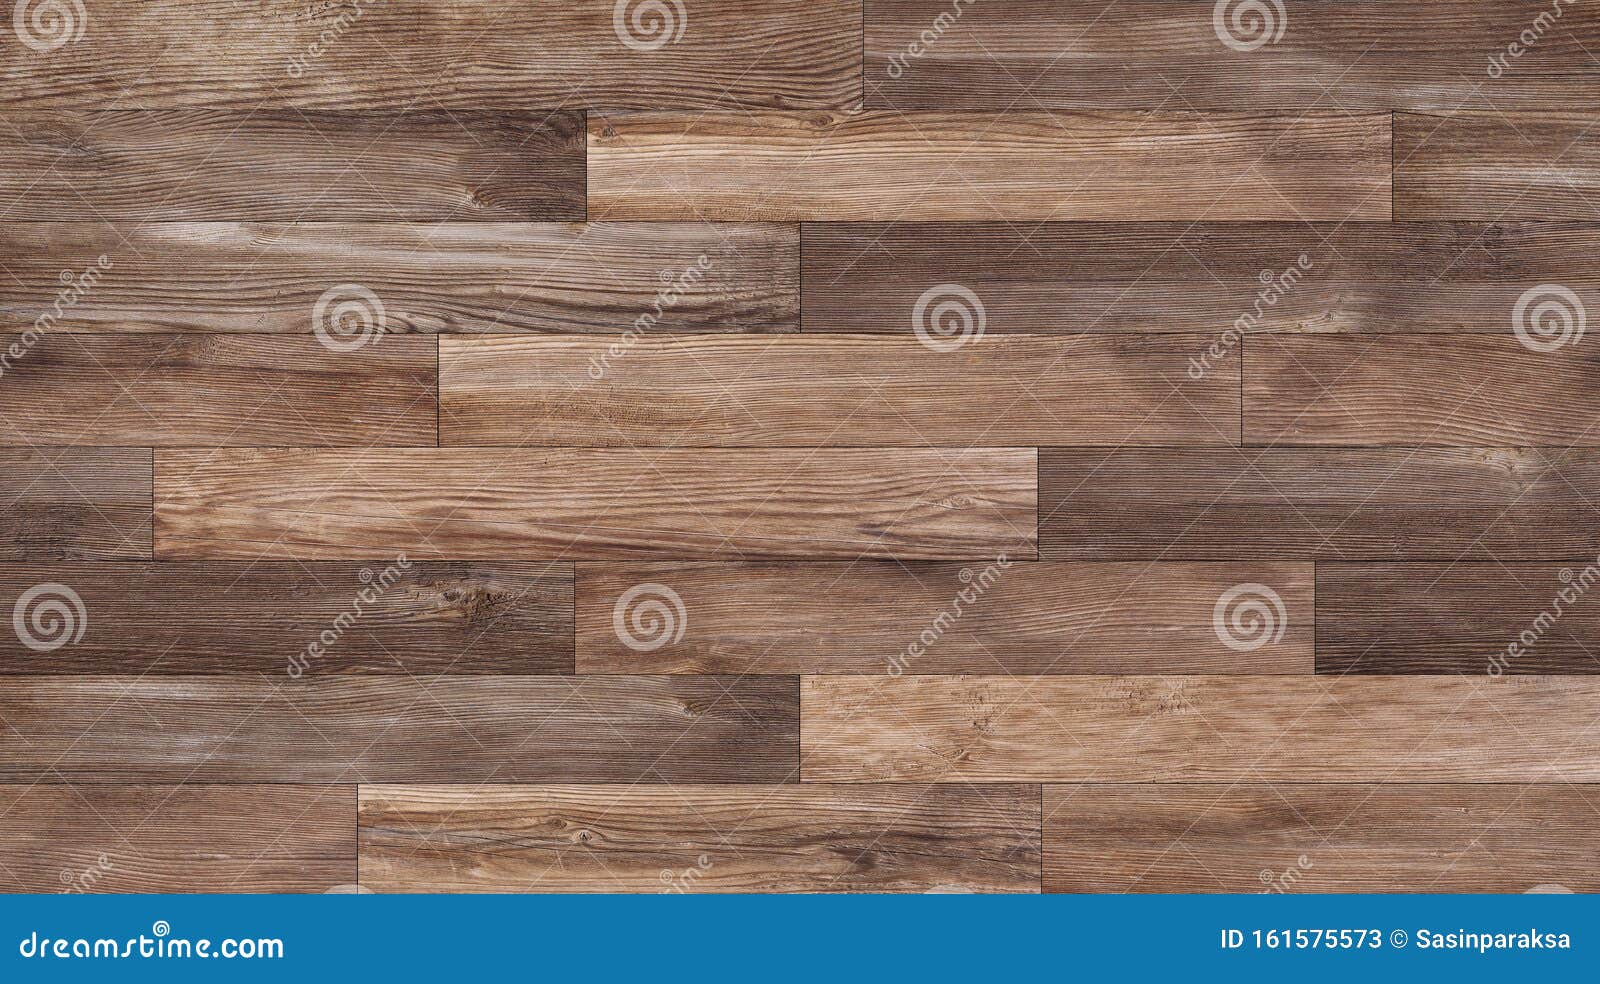 seamless wood texture, hardwood floor texture